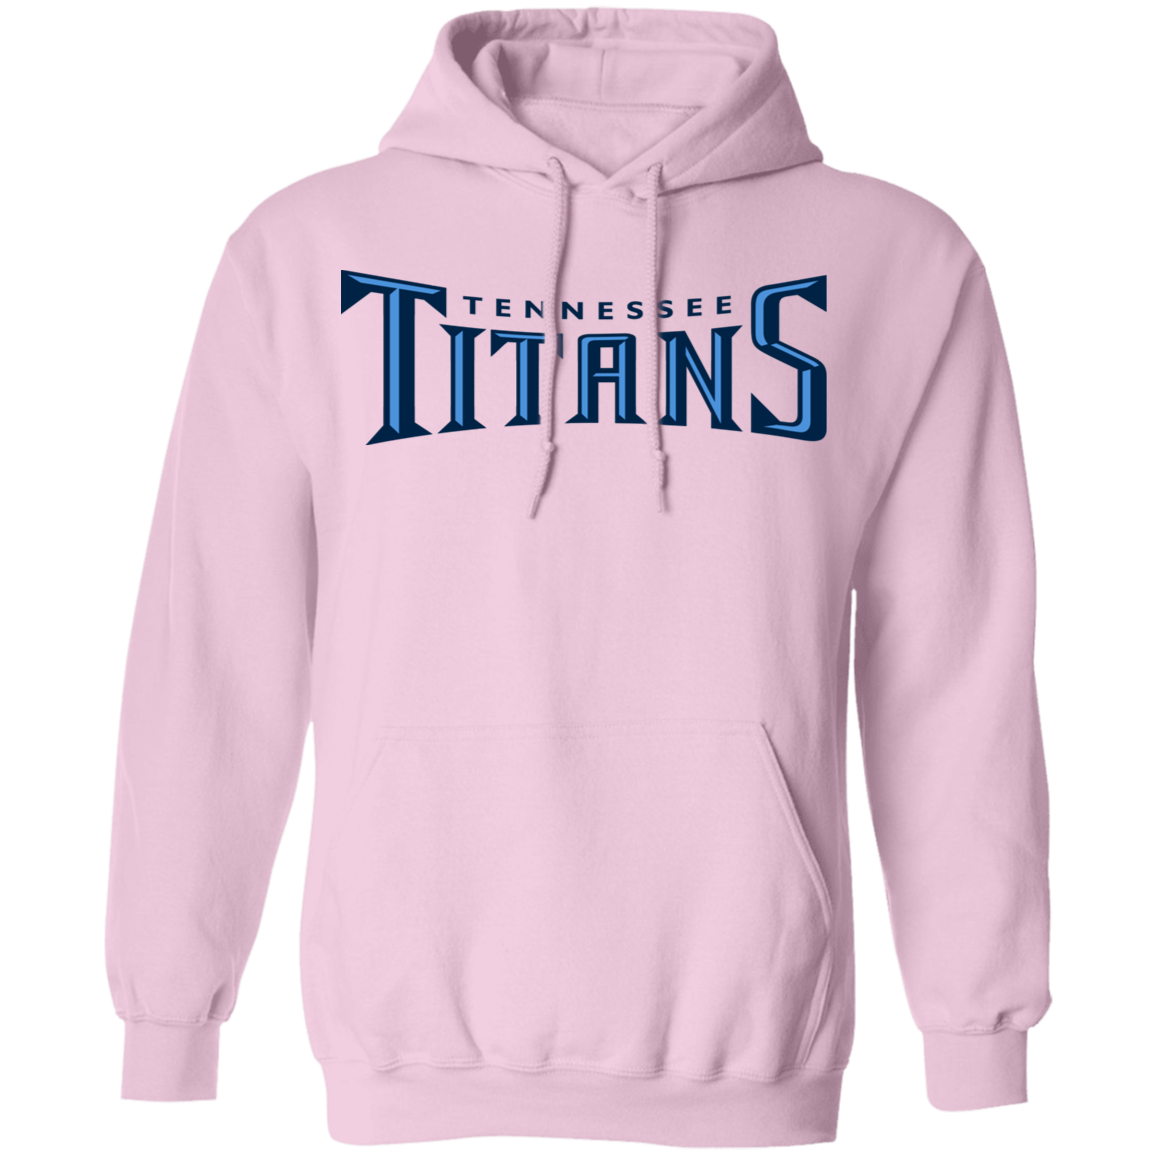 Gildan Tennessee Titans Pullover Hoodie Light Pink 4XL